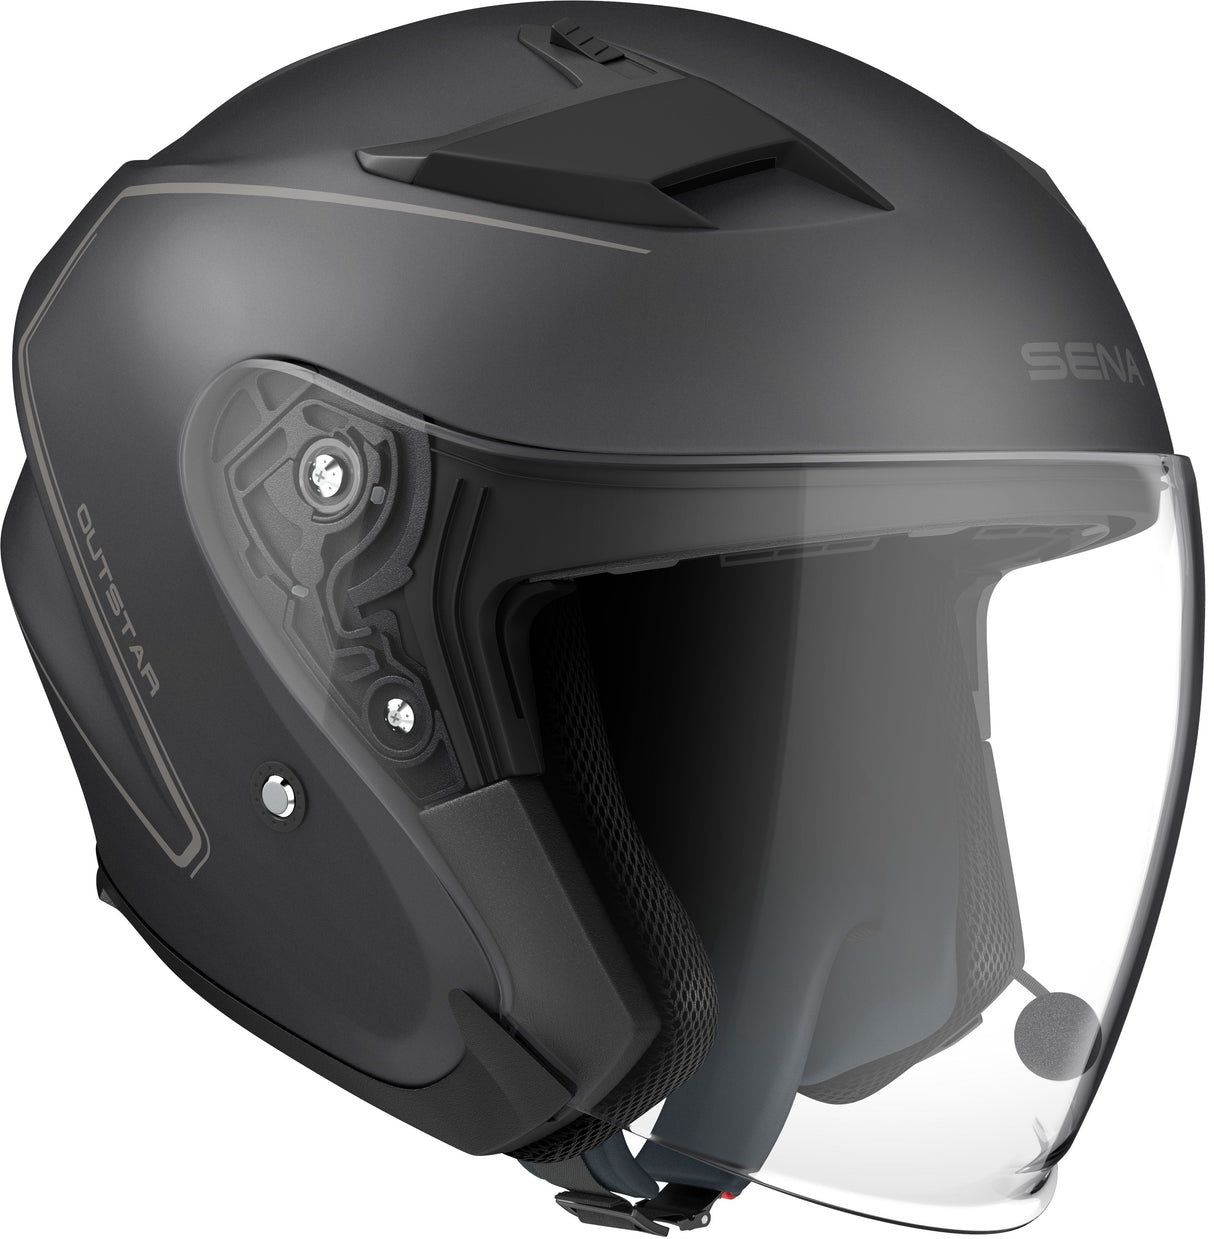 Sena Outstar Bluetooth -Integrated Open Face Helmet - Matt Black